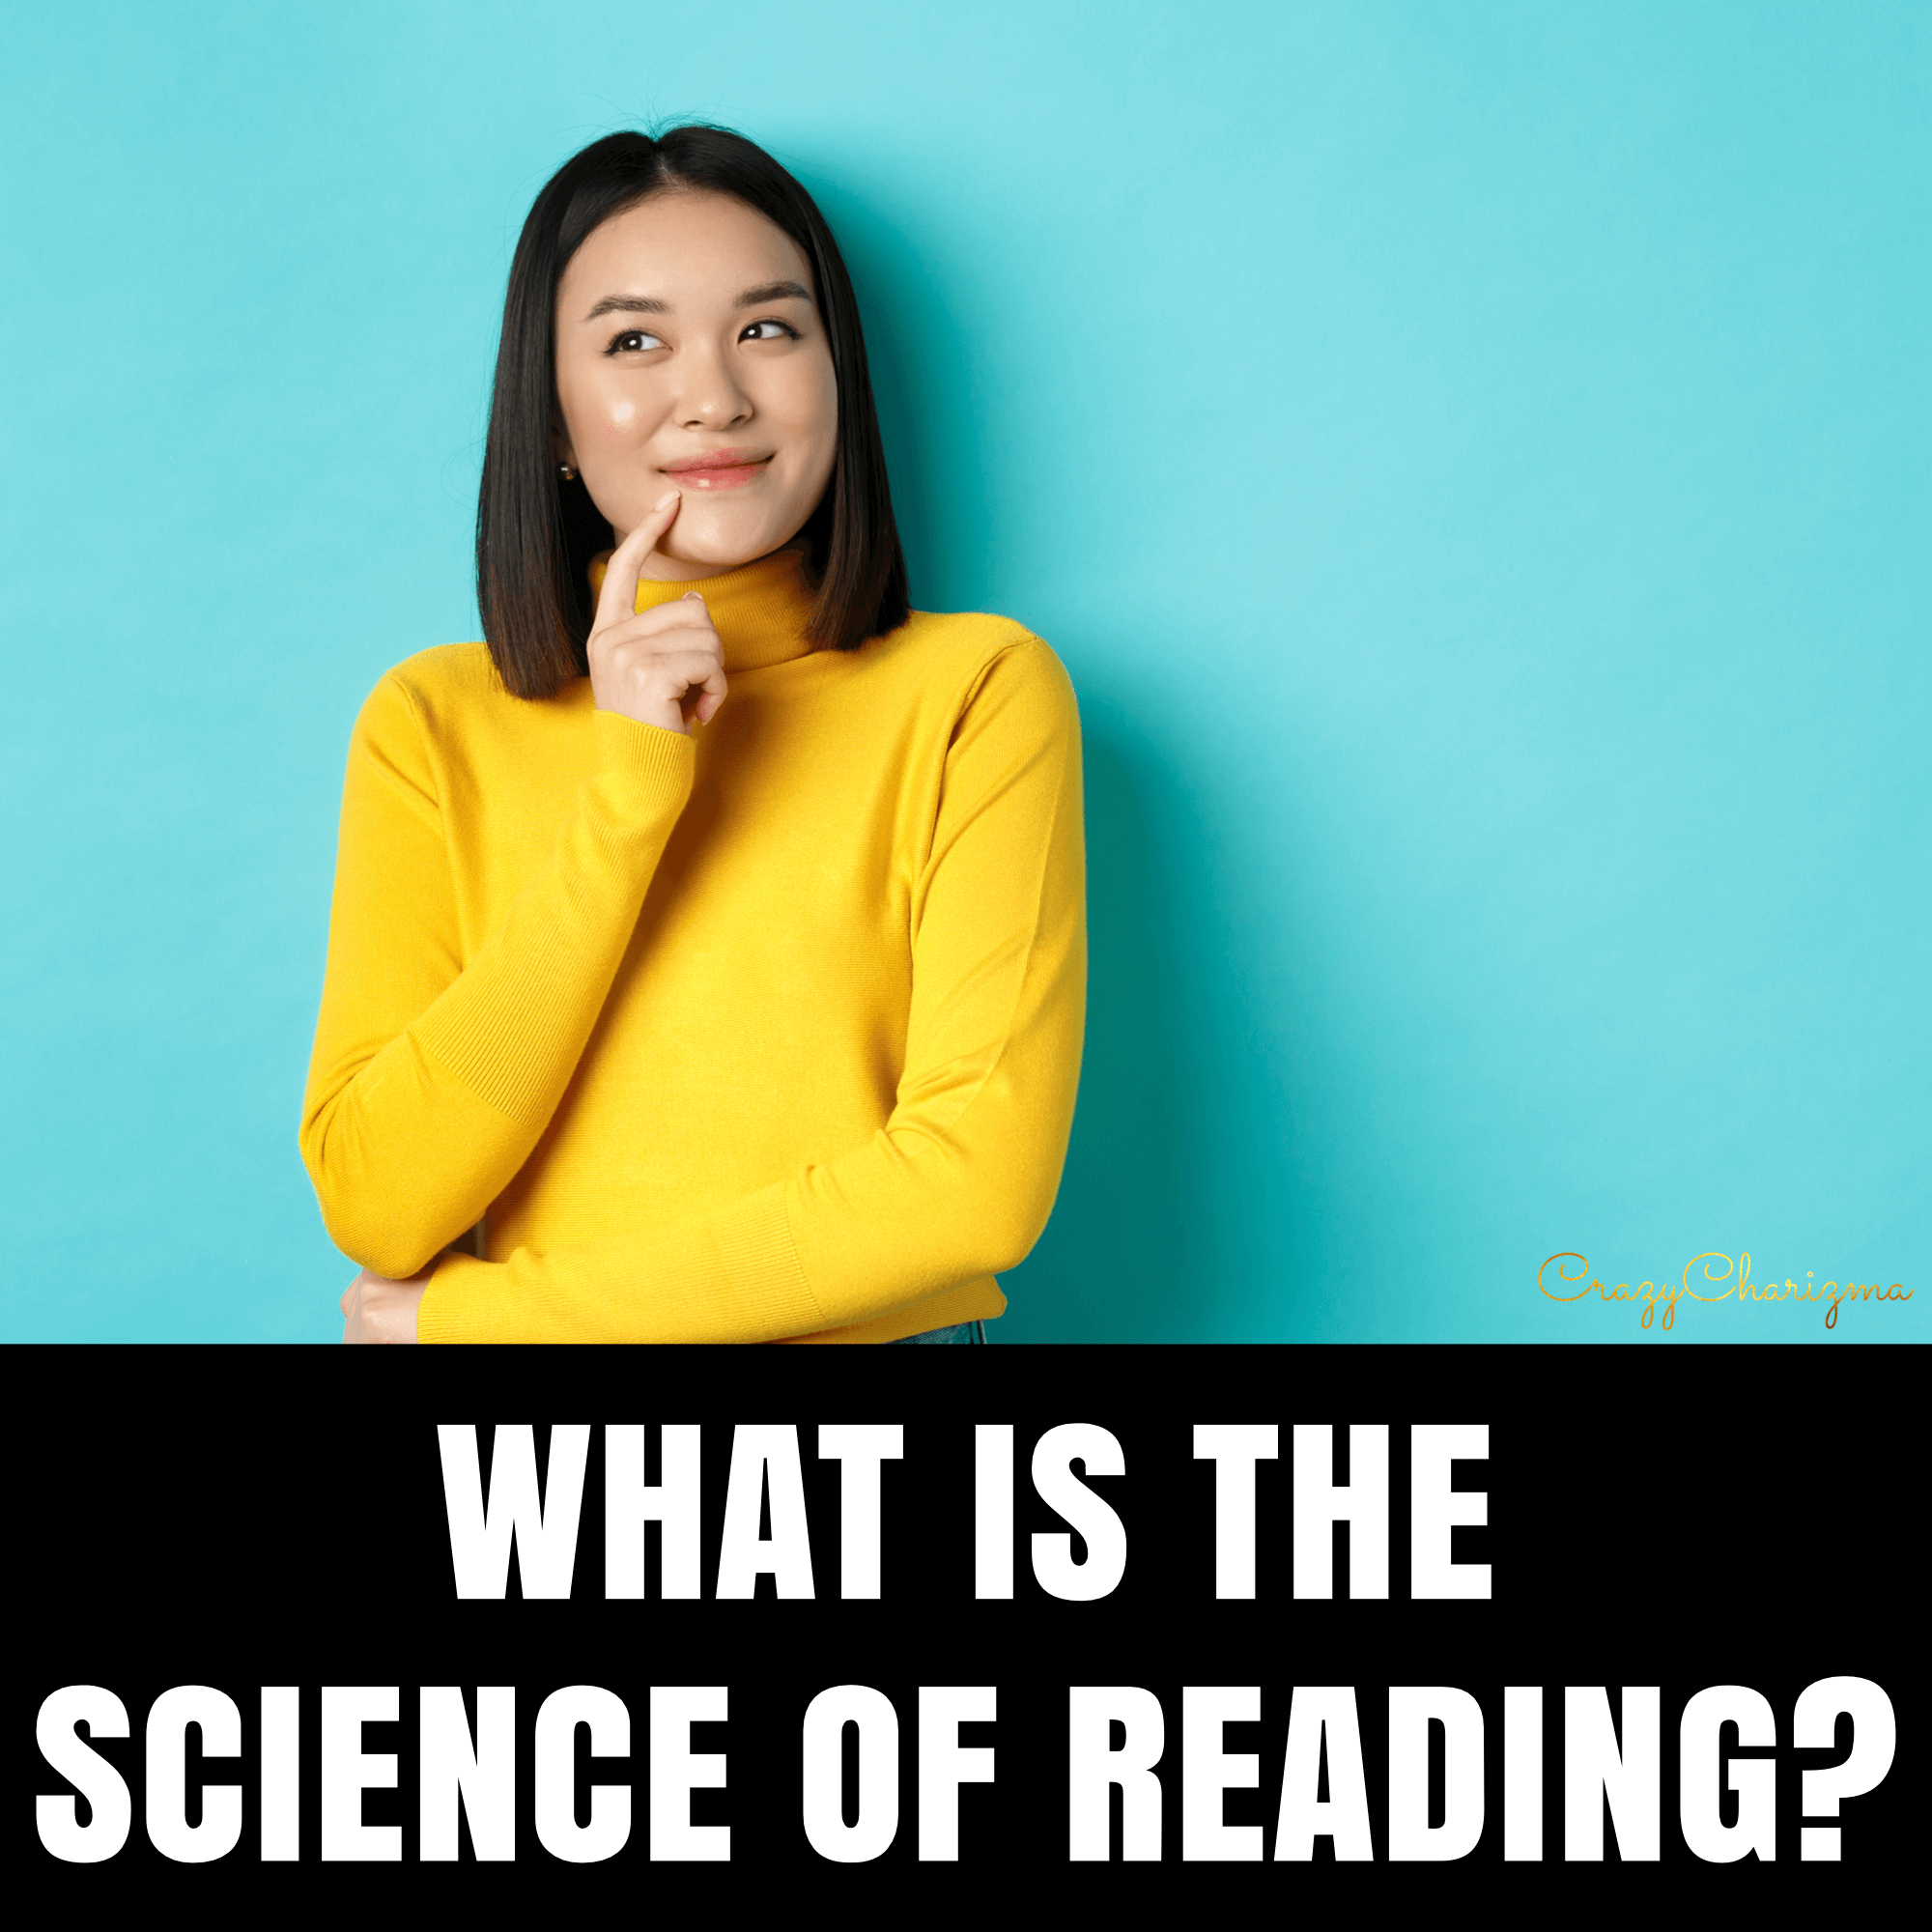 Science of Reading blogpost